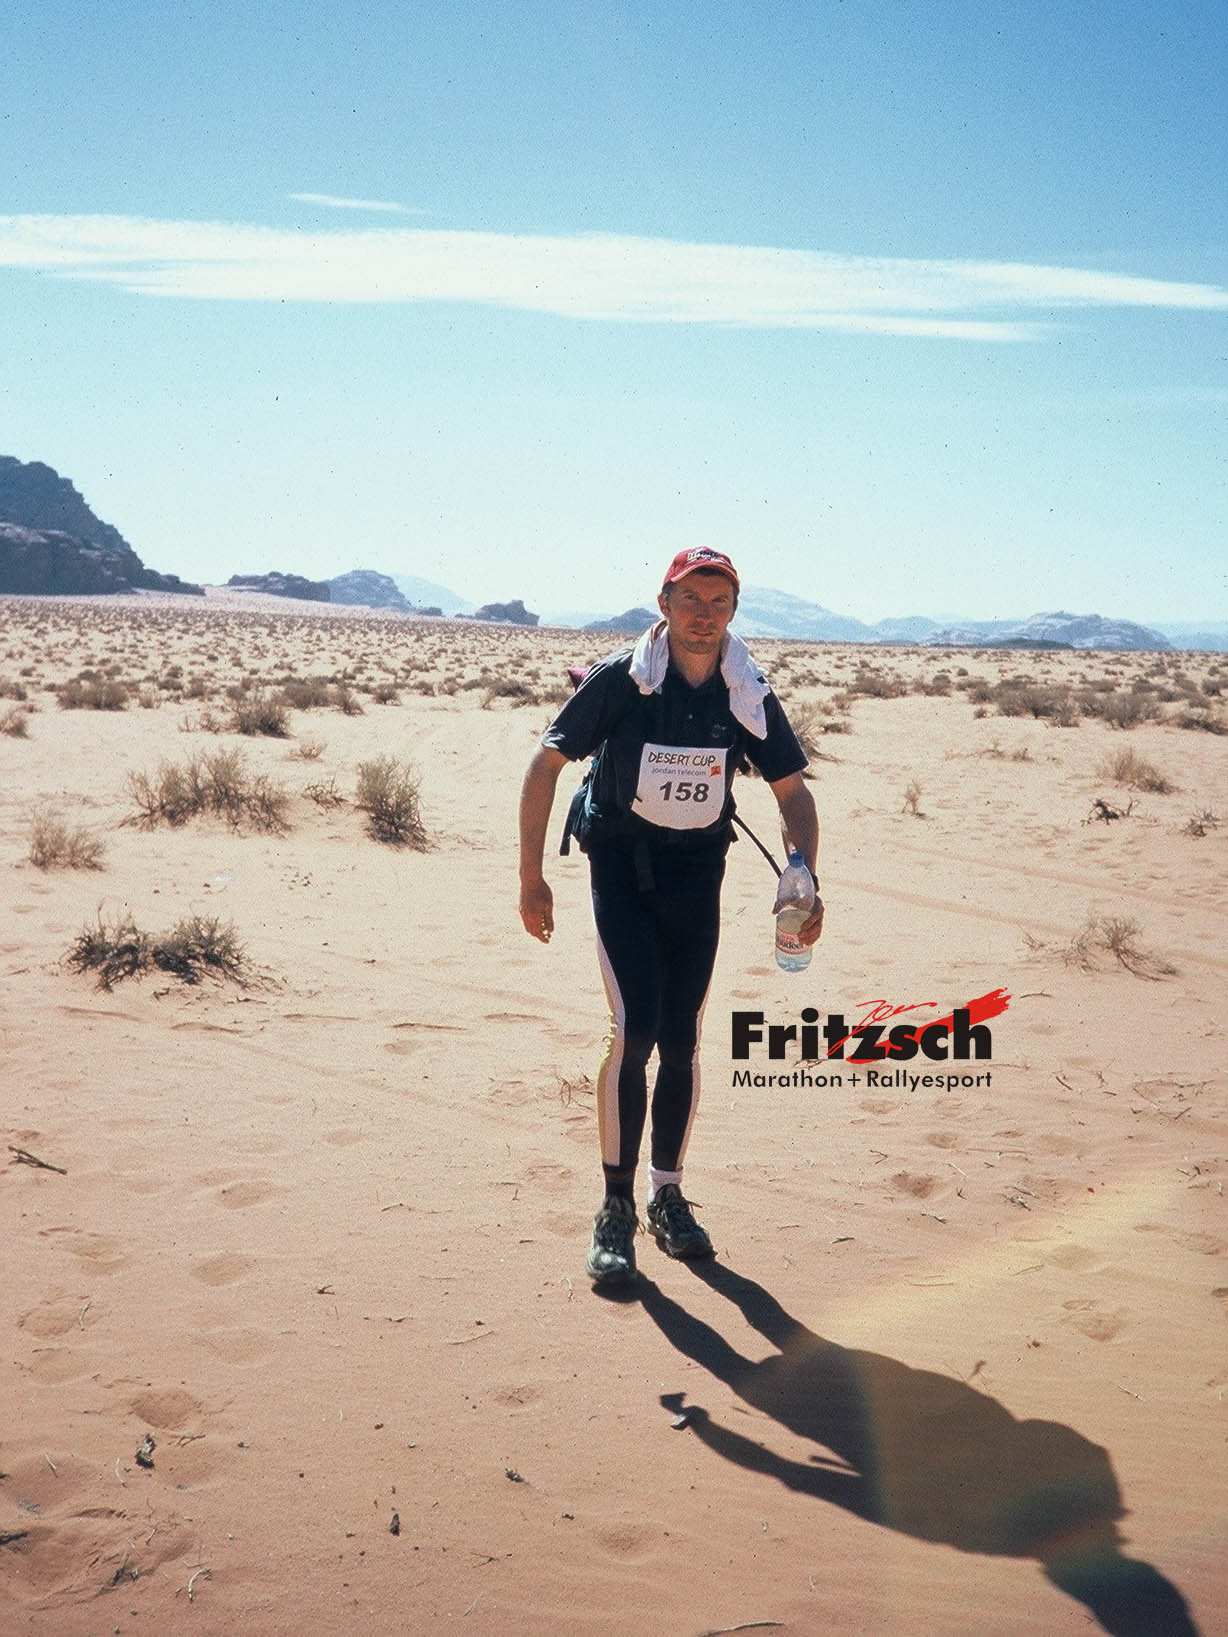 Extreme & Long Desert Marathon in Jordan